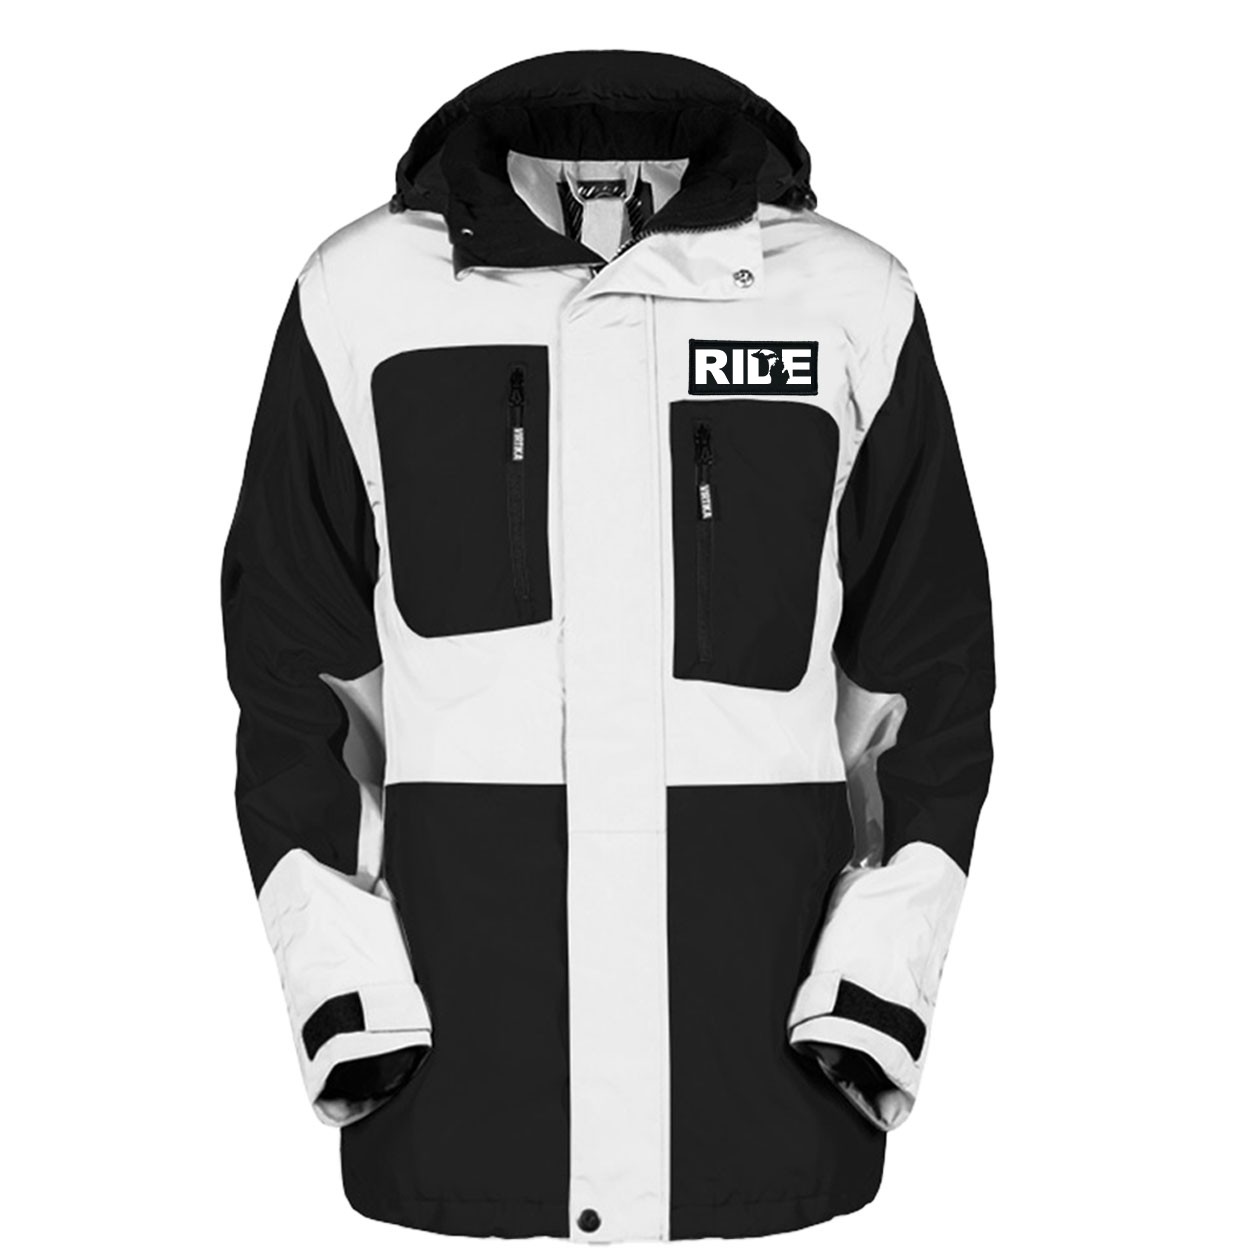 Ride Michigan Pro Waterproof Breathable Winter Virtika Jacket Black/White (White Logo)